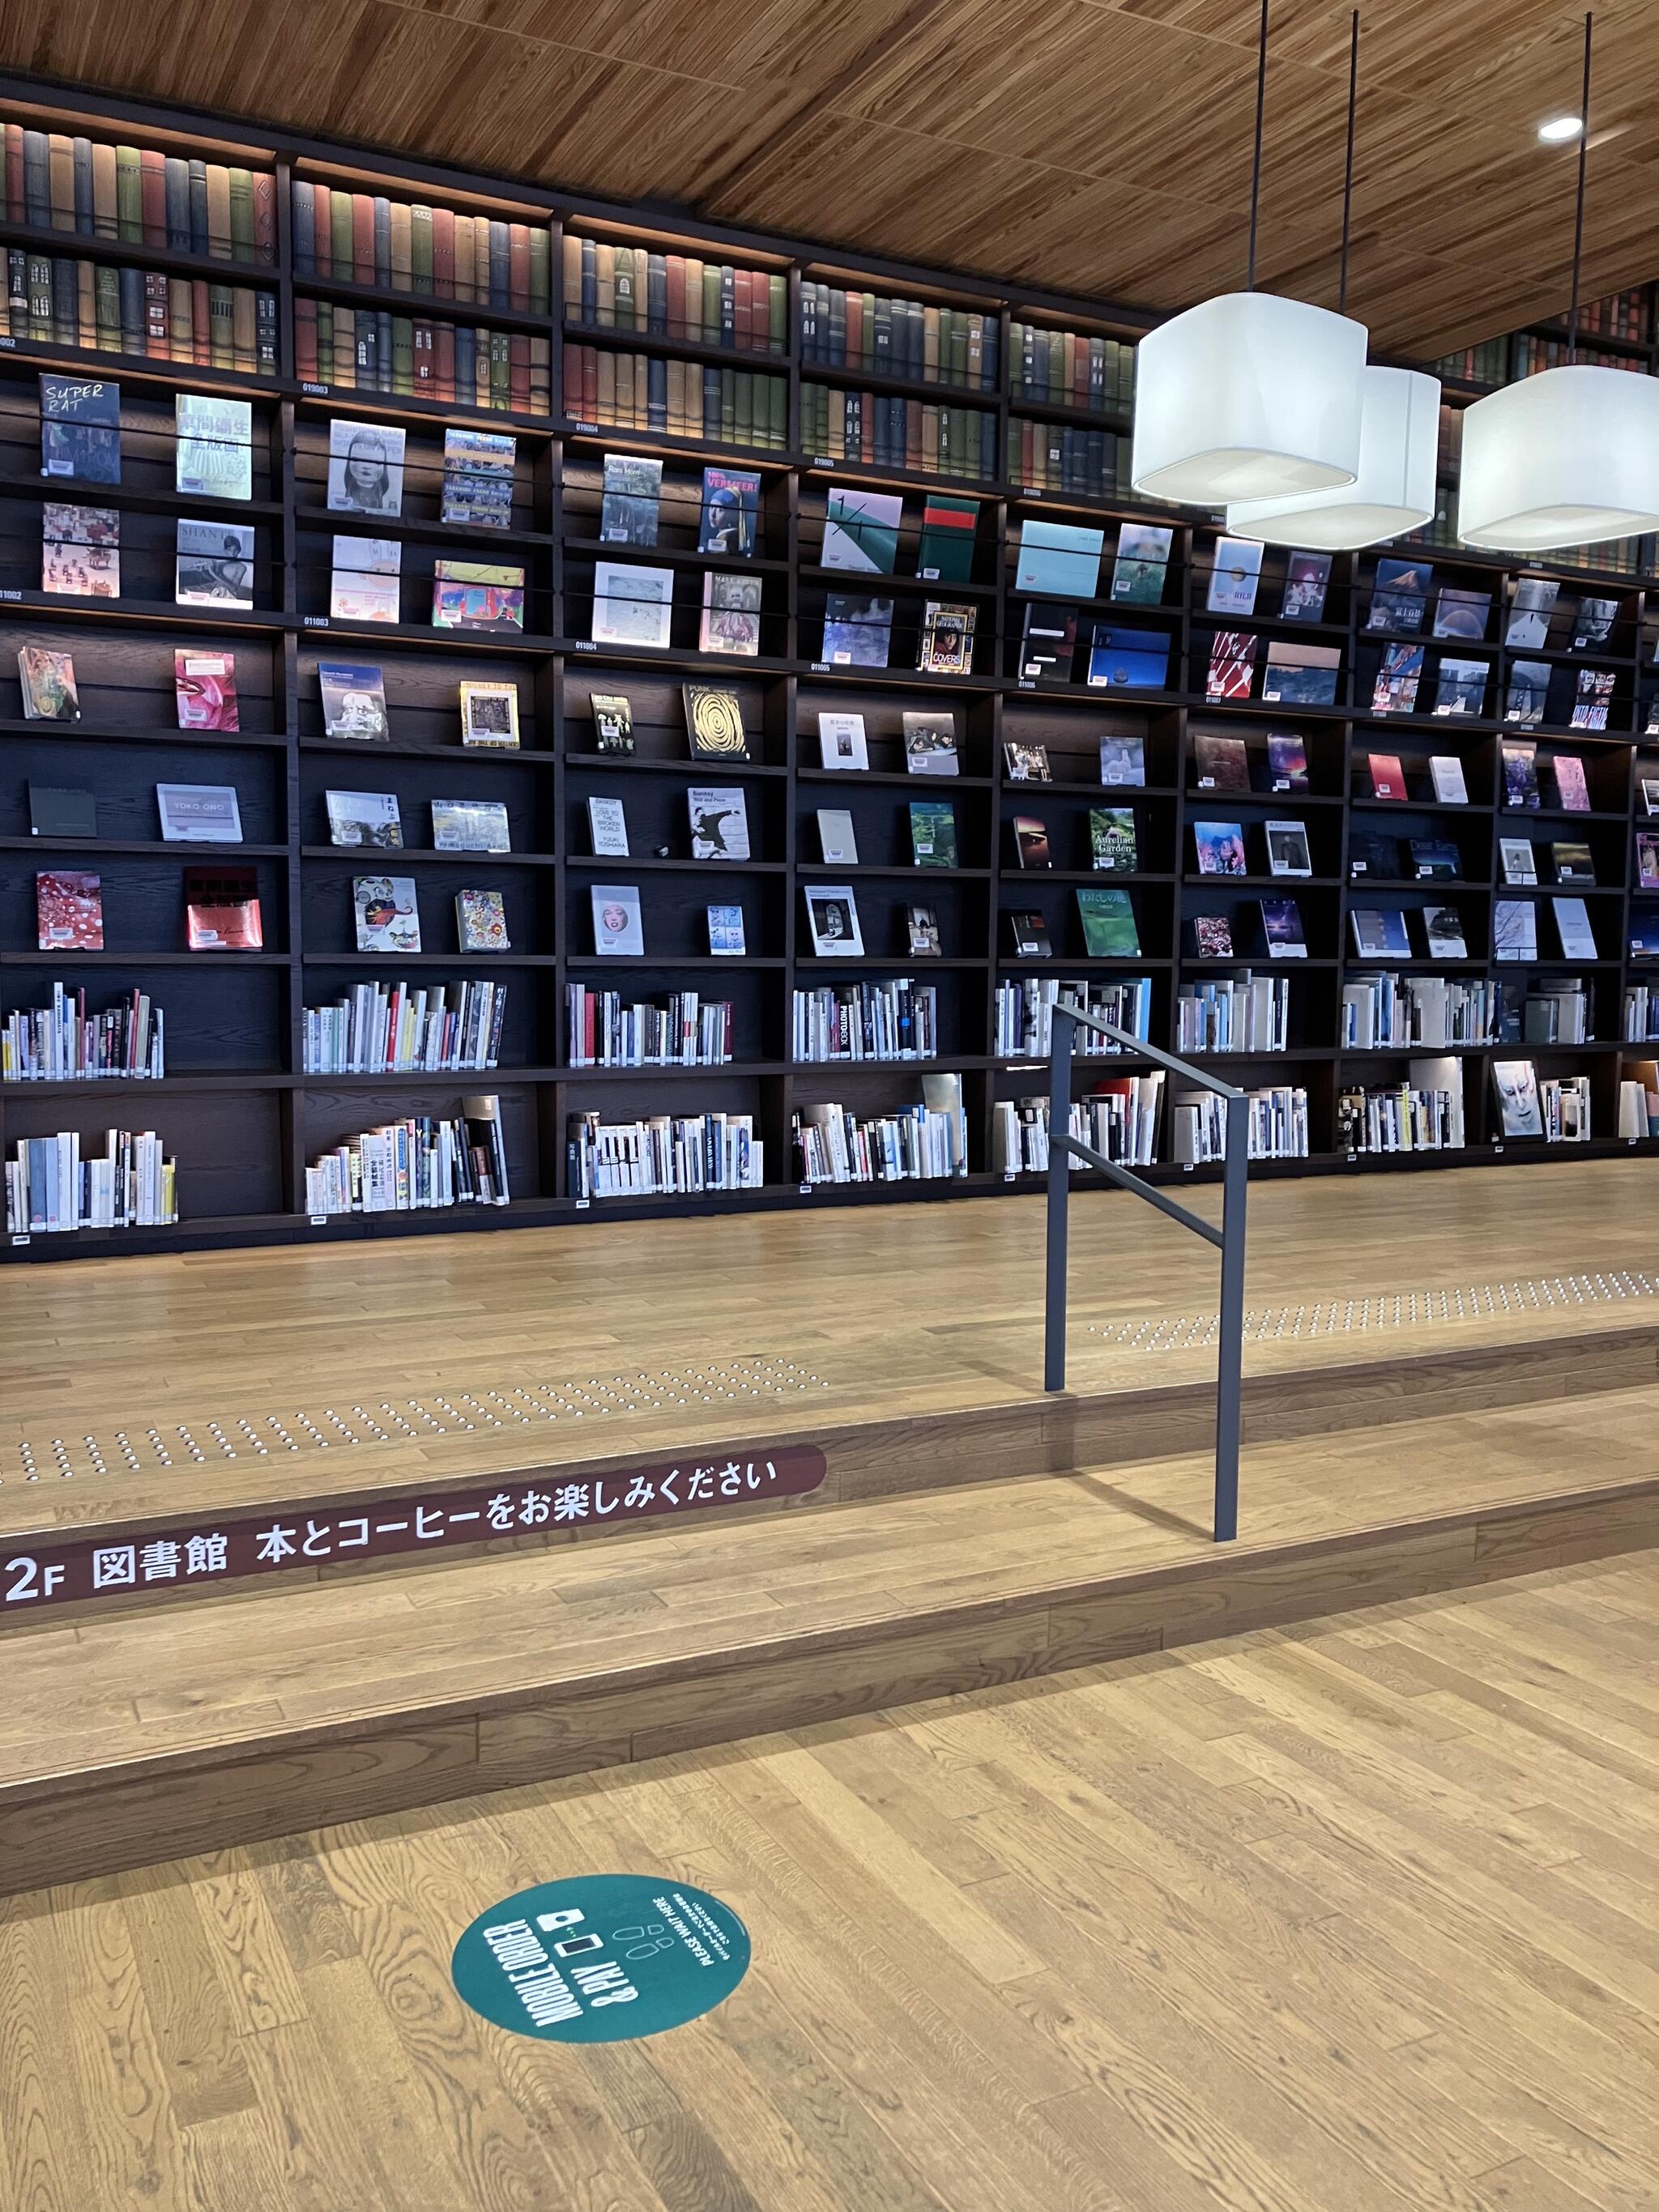 TSUTAYA BOOK 蔦屋書店 周南市立徳山駅前図書館の代表写真1